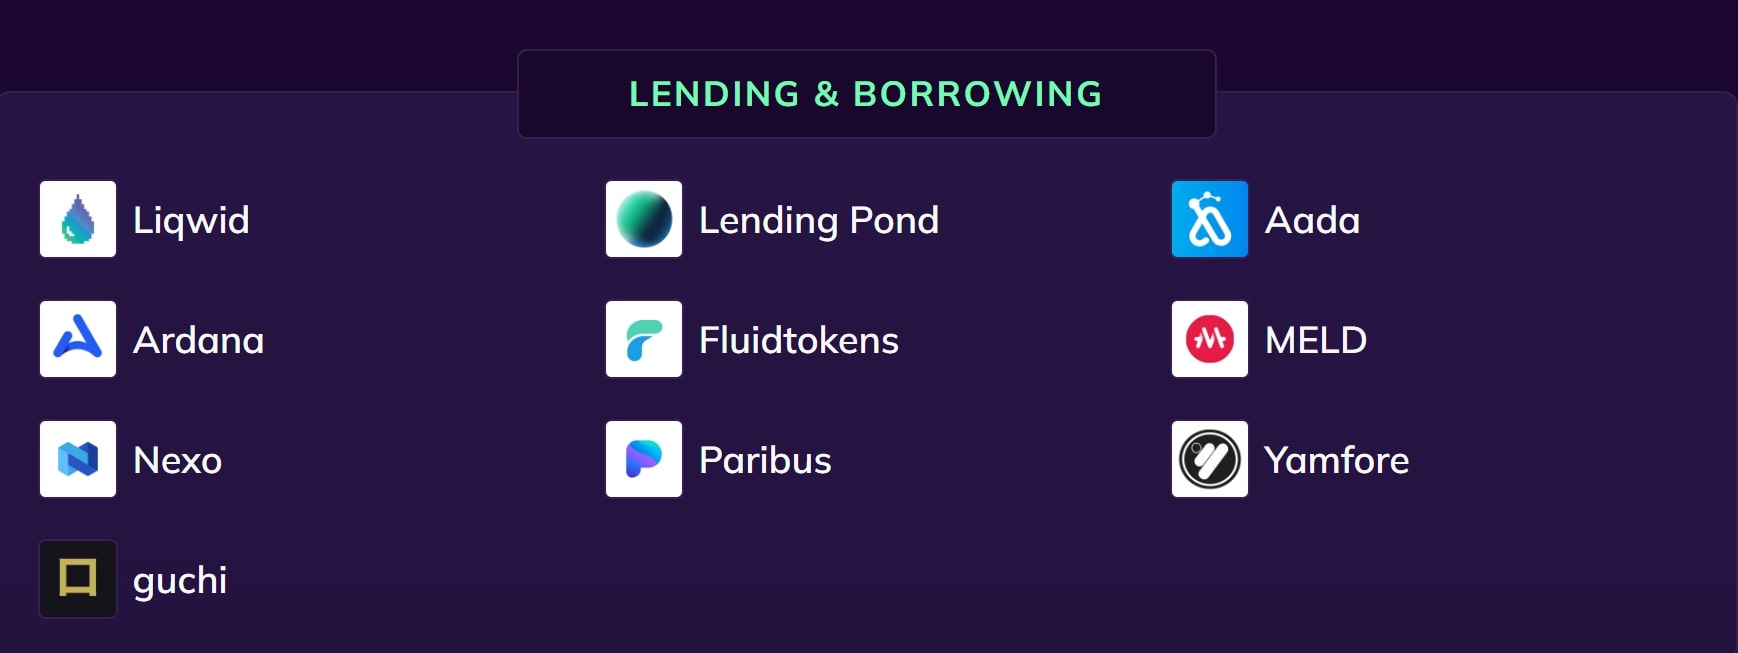 Lending and Borrowing trên Cardano